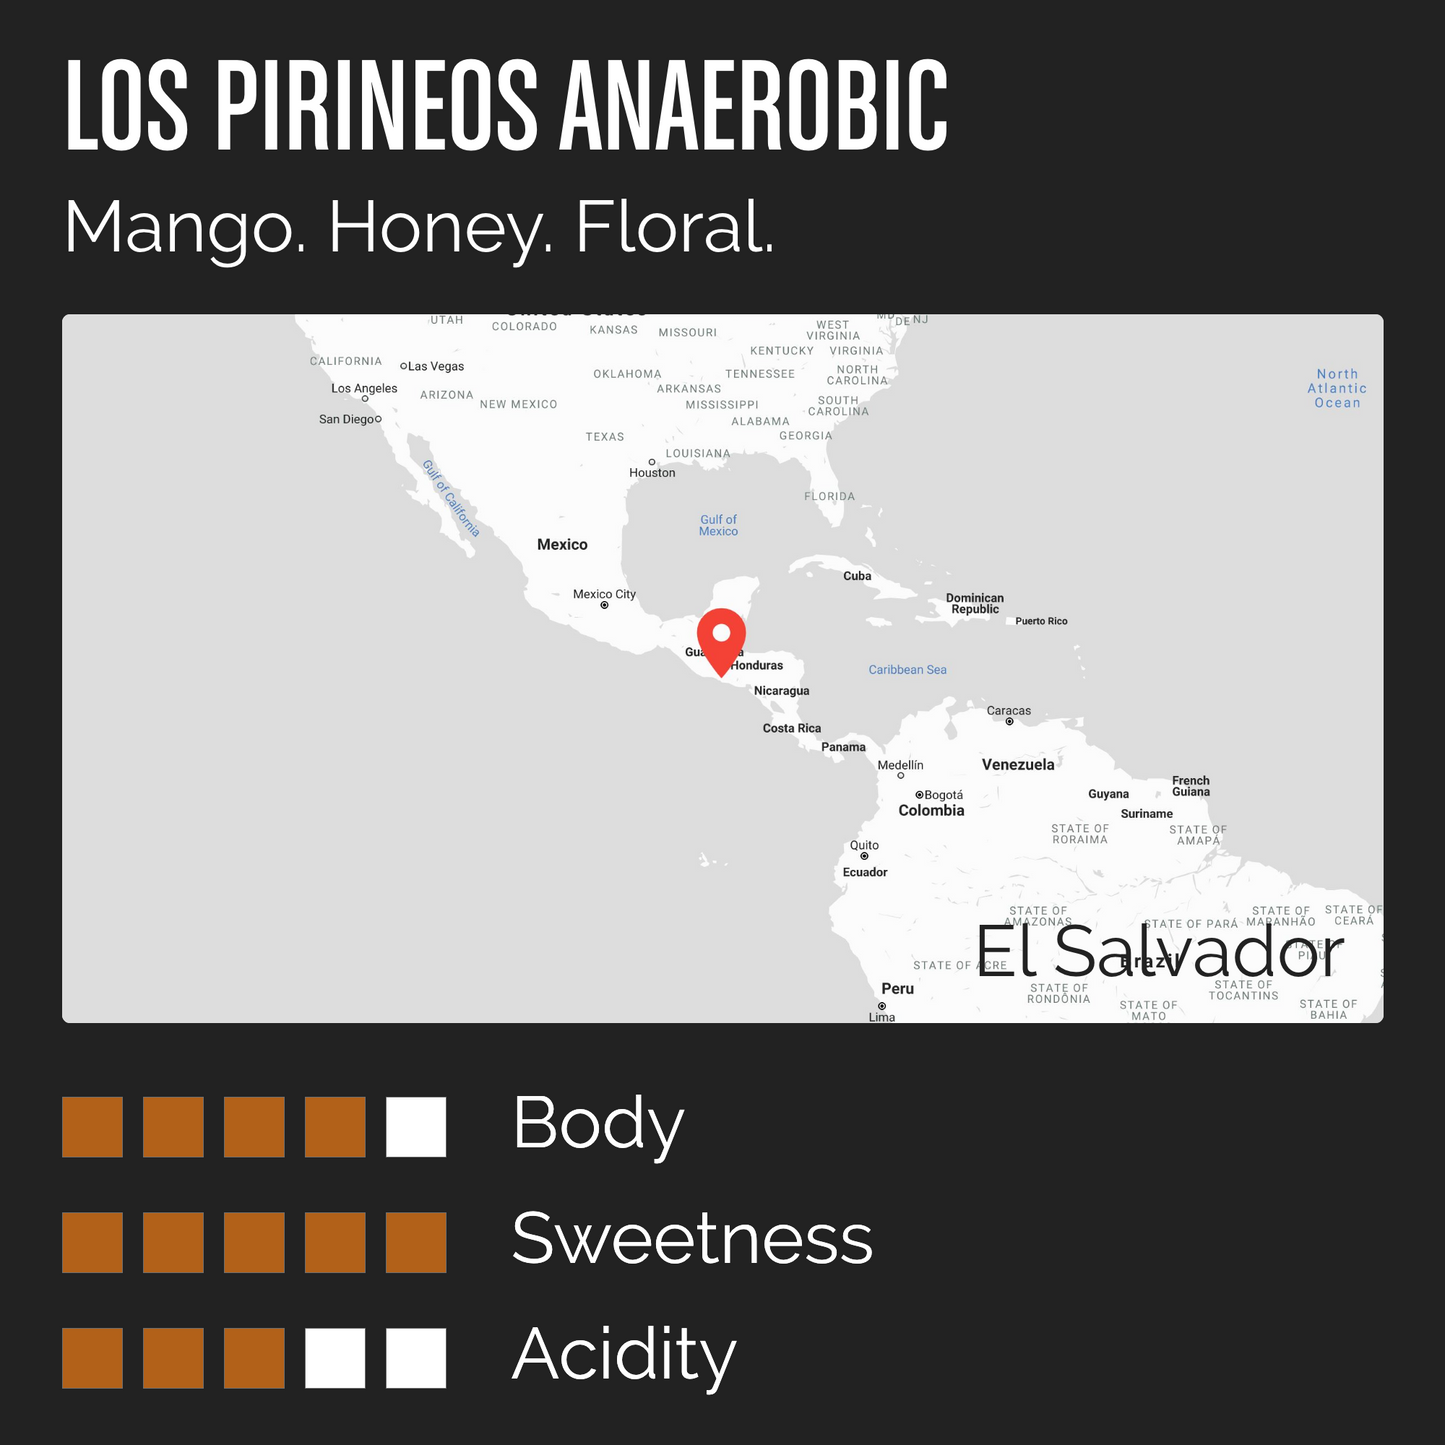 Los Pirineos Anaerobic info card with tasting notes: mango, honey, floral.